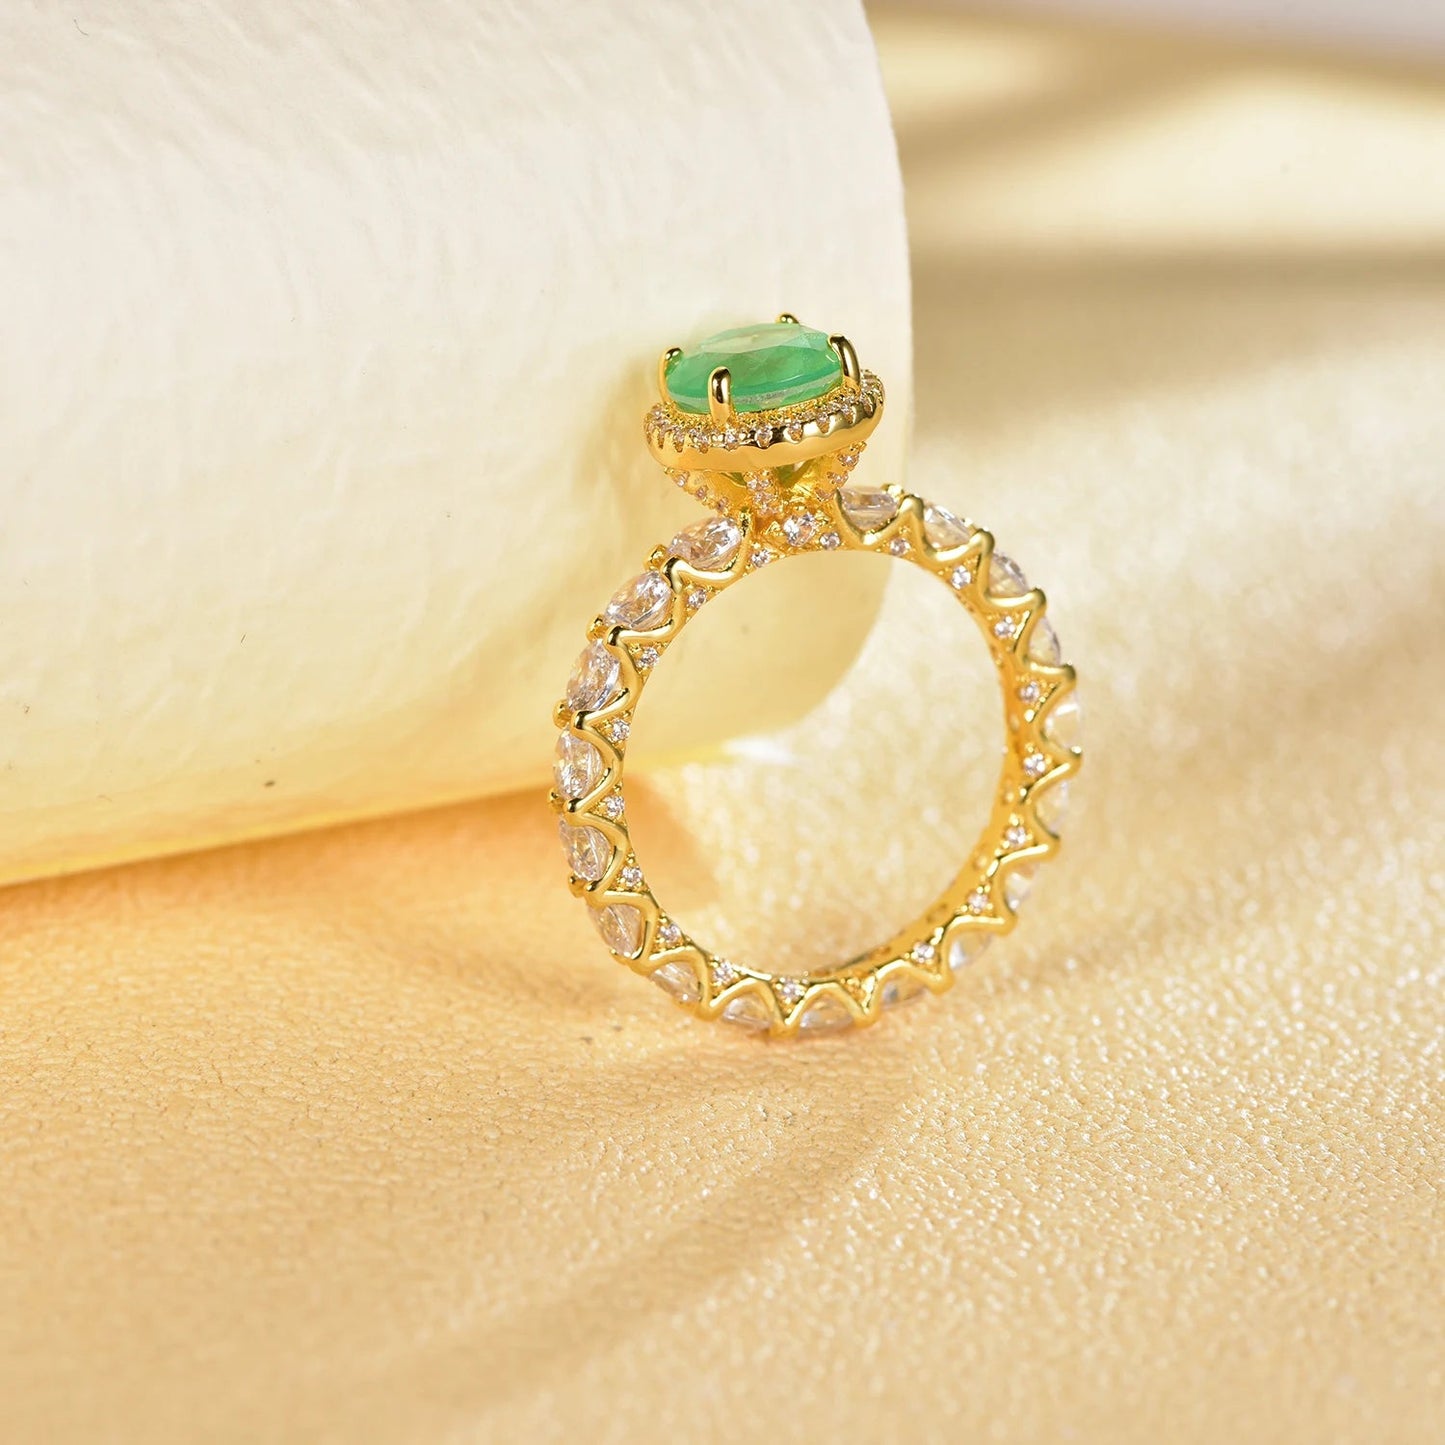 Retro Fashion Jewelry Ring Irregular Natural Stone Ring Onyx Carnelian Colored Stone 18k Gold Steel Jewelry Kirin Jewelry